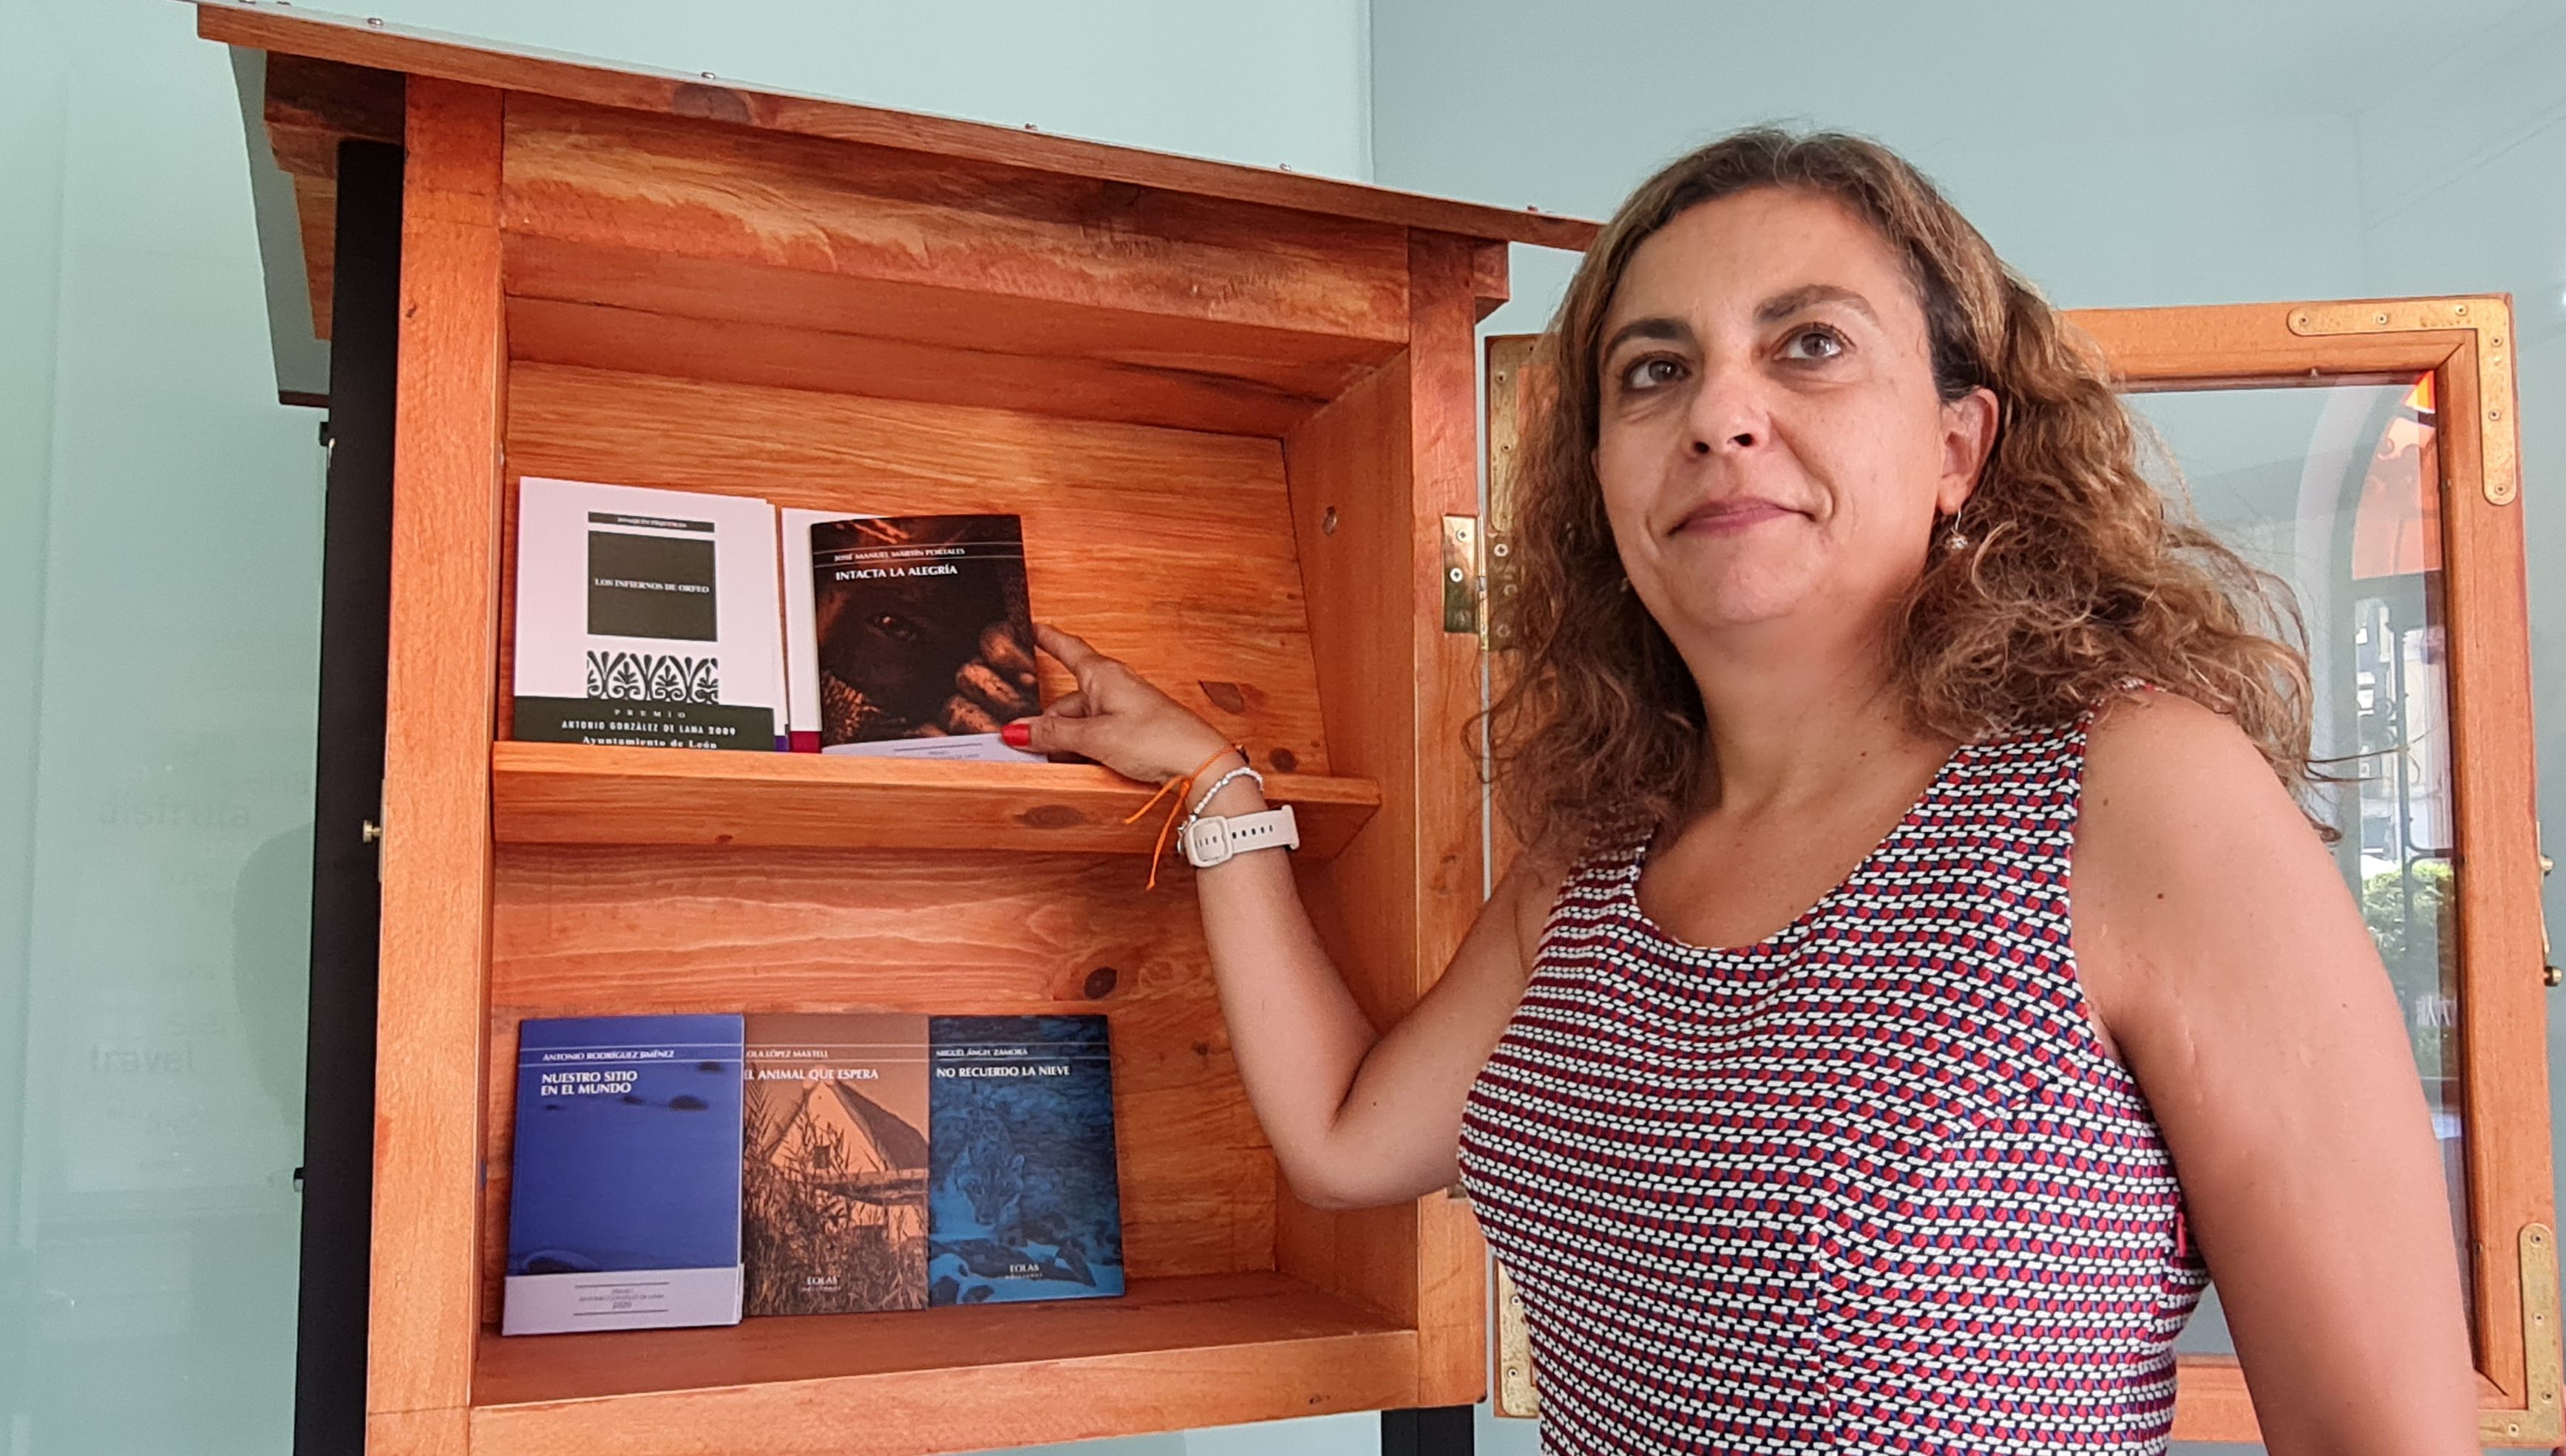 La concejala Mercedes Escudero junto al modelo de librería que del anfiTetatro de San Marcos. | L.N.C.